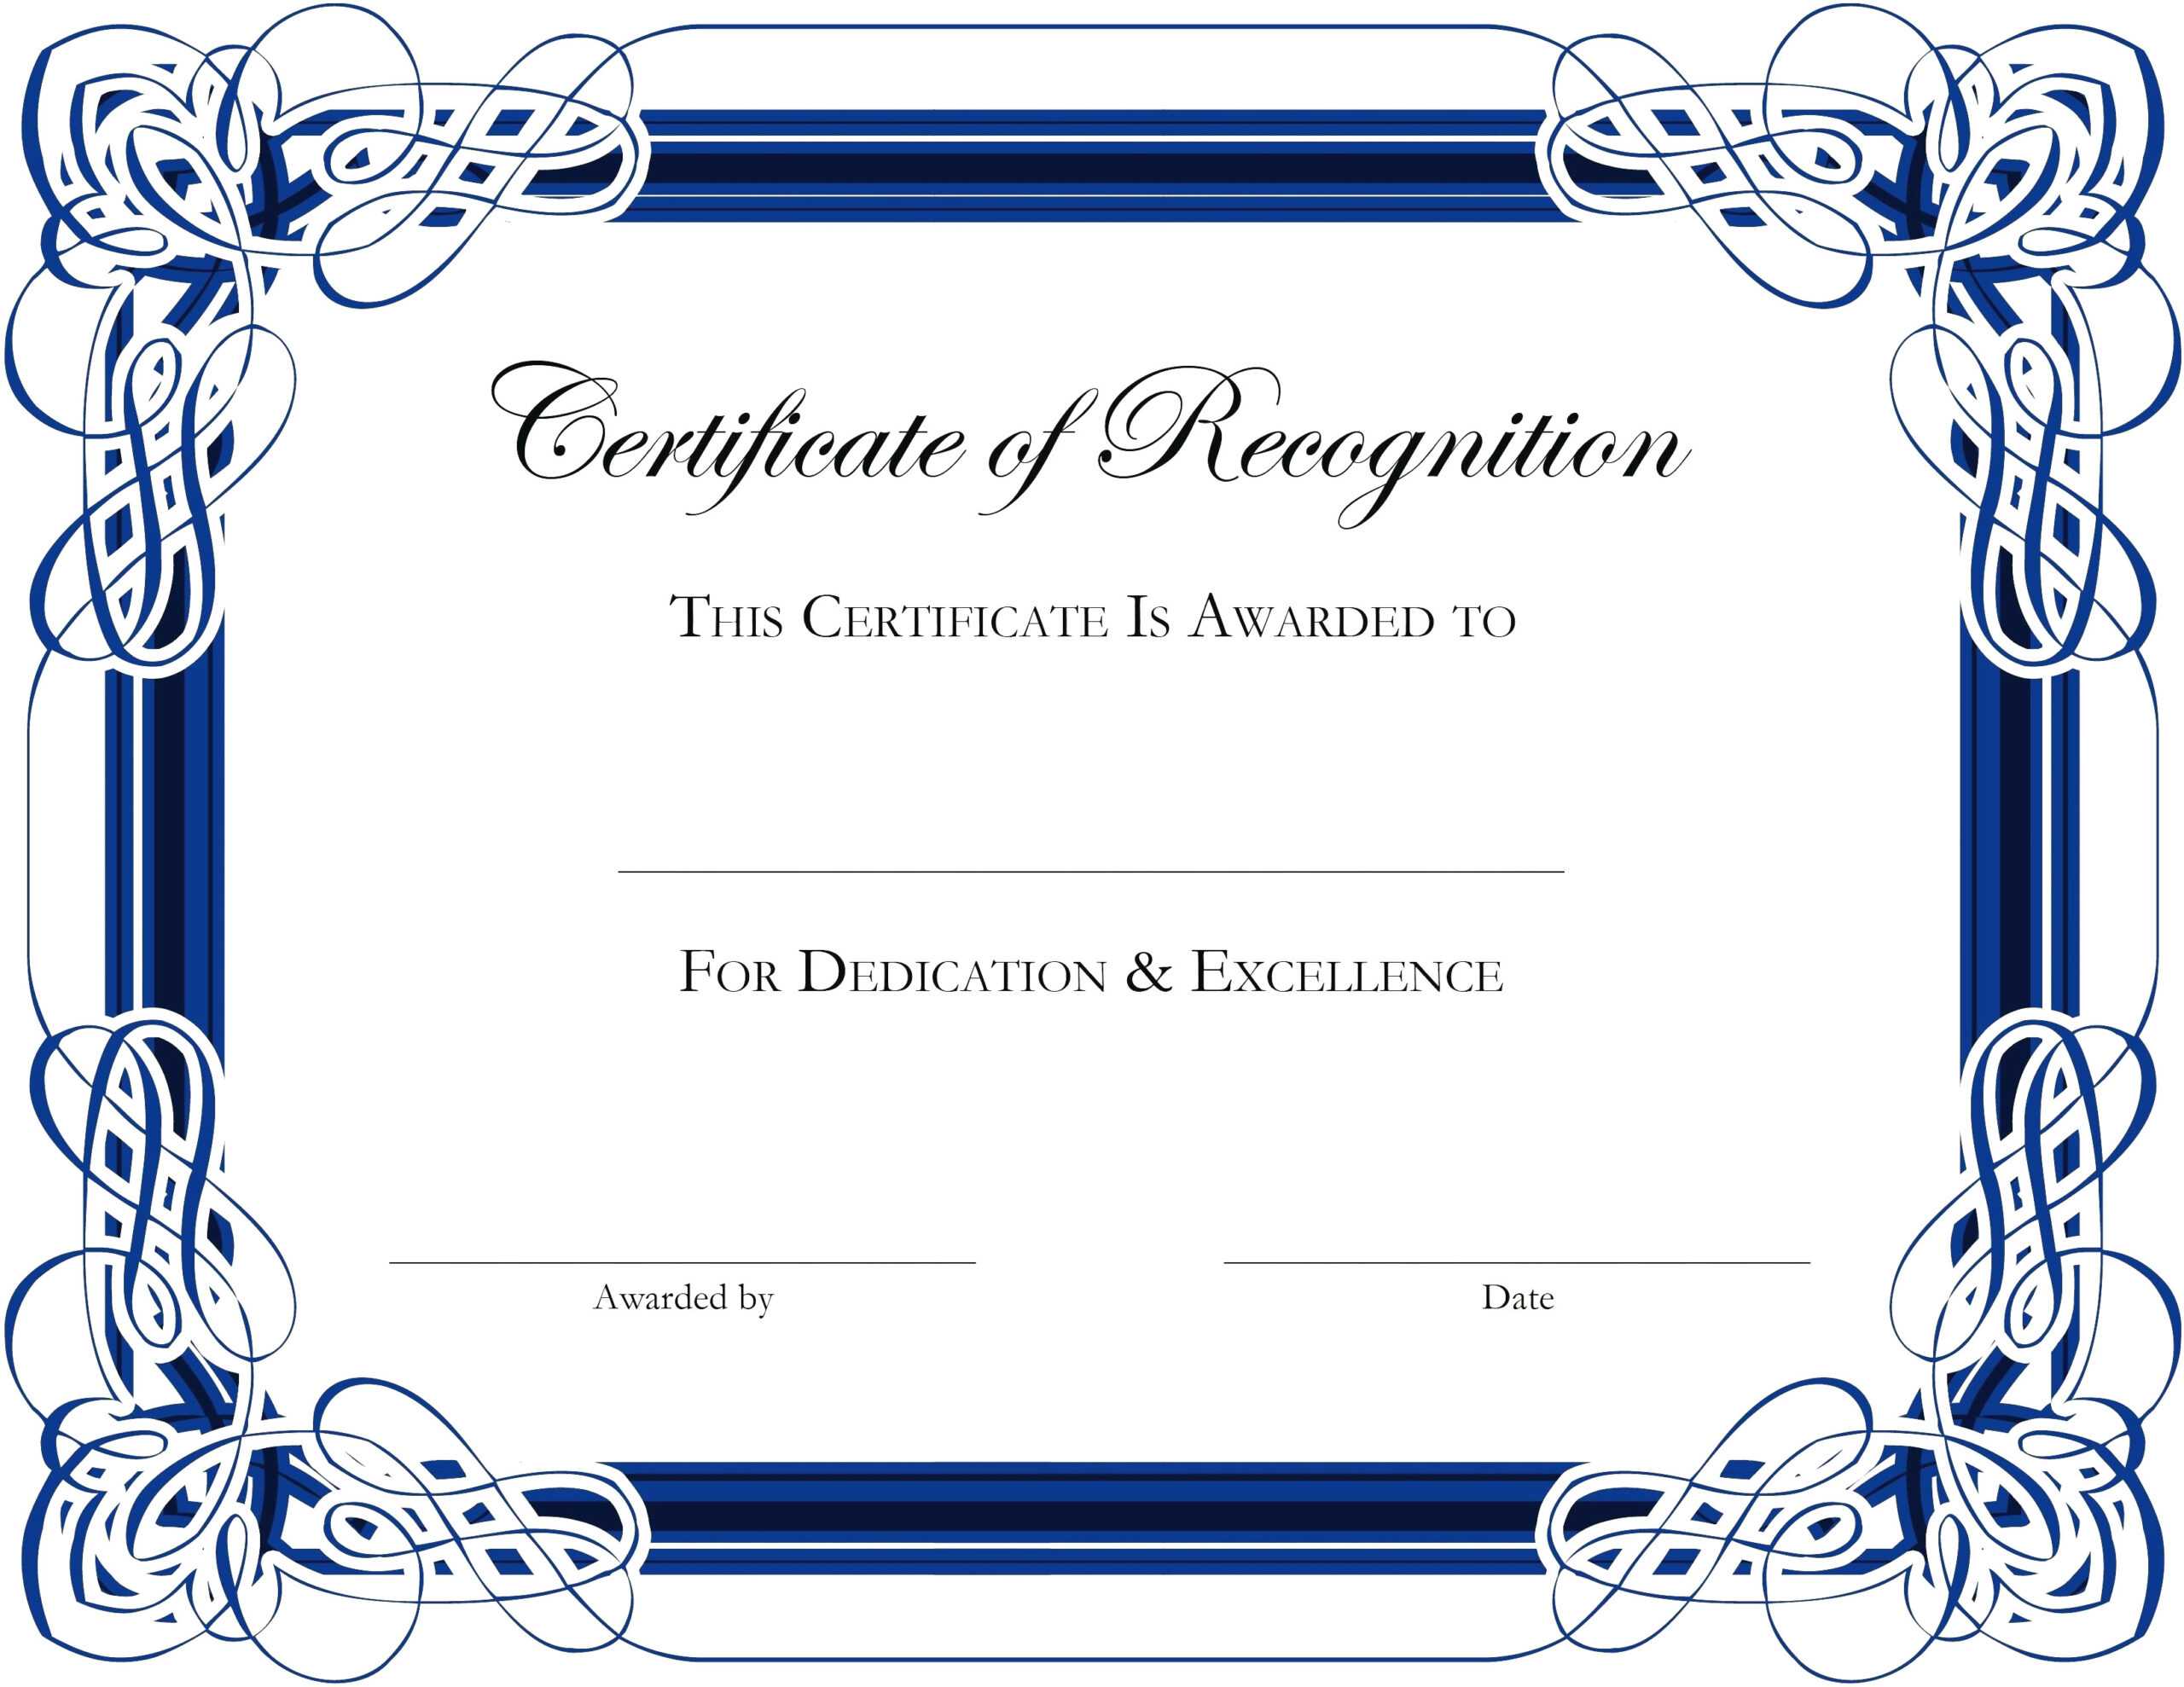 Award Certificate Templates Word 2007 - Atlantaauctionco Throughout Award Certificate Templates Word 2007